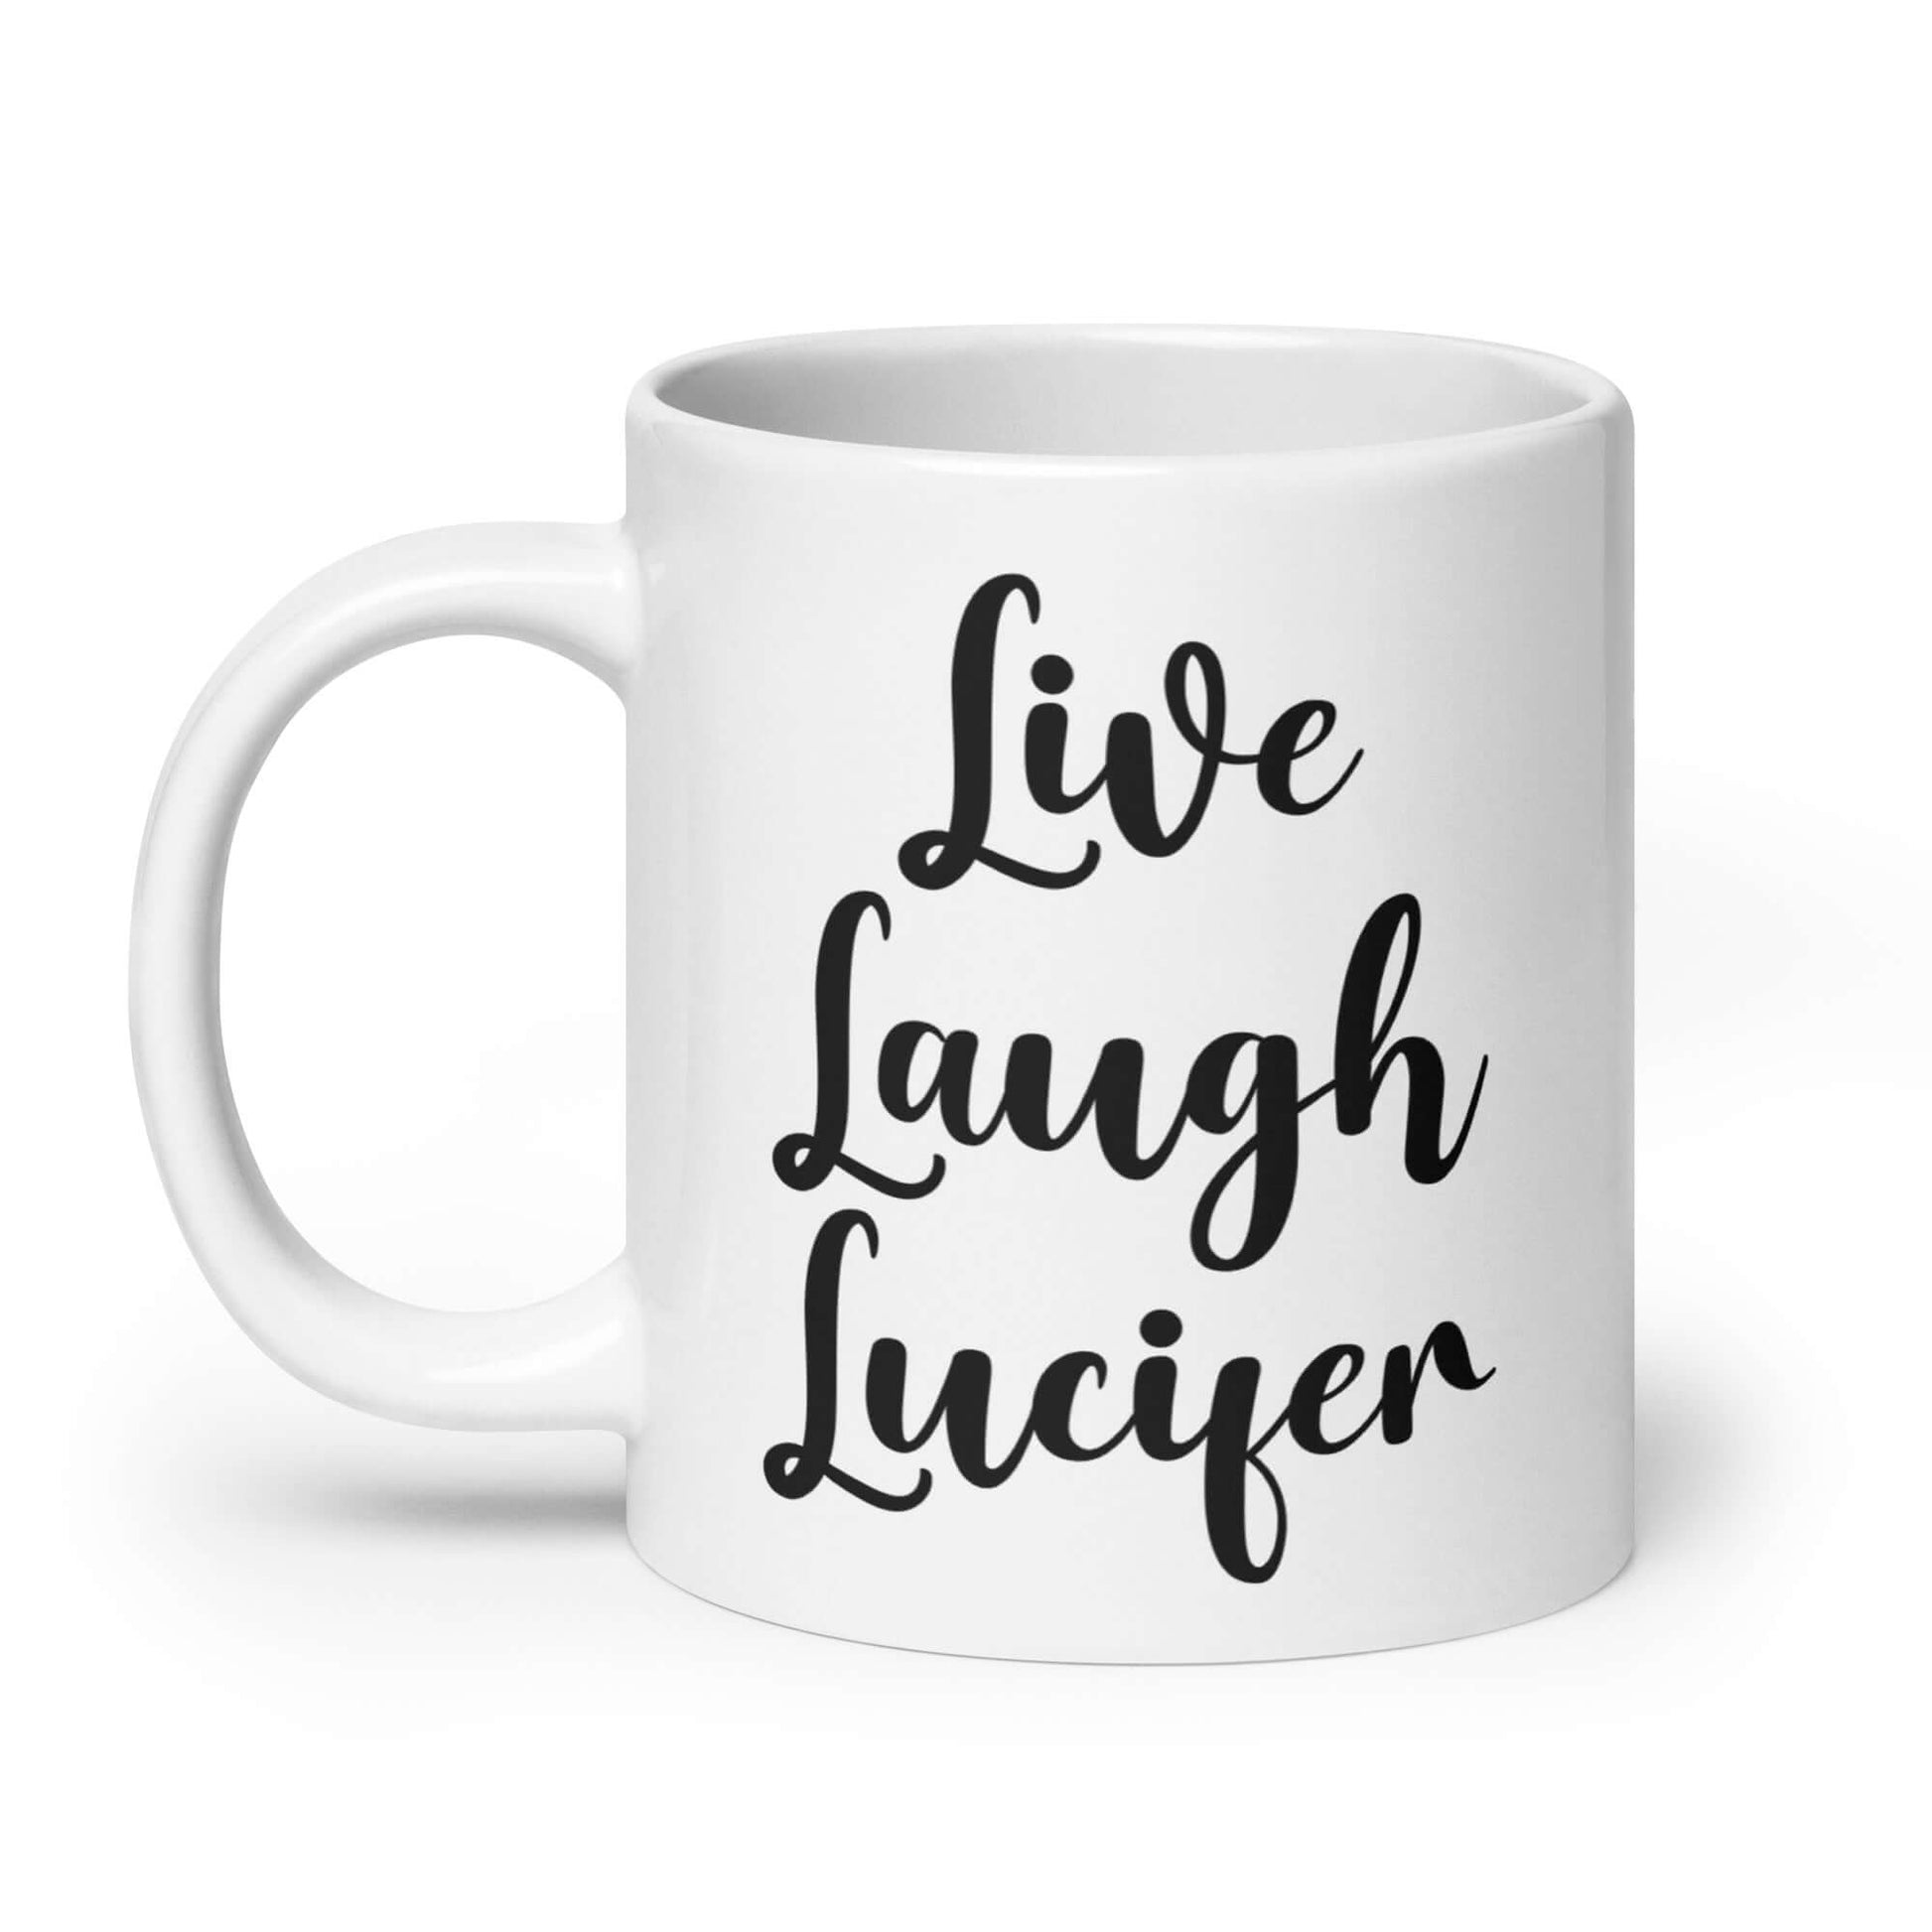 White ceramic mug with the parody phrase Live, Laugh, Lucifer printed on both sides of the mug.